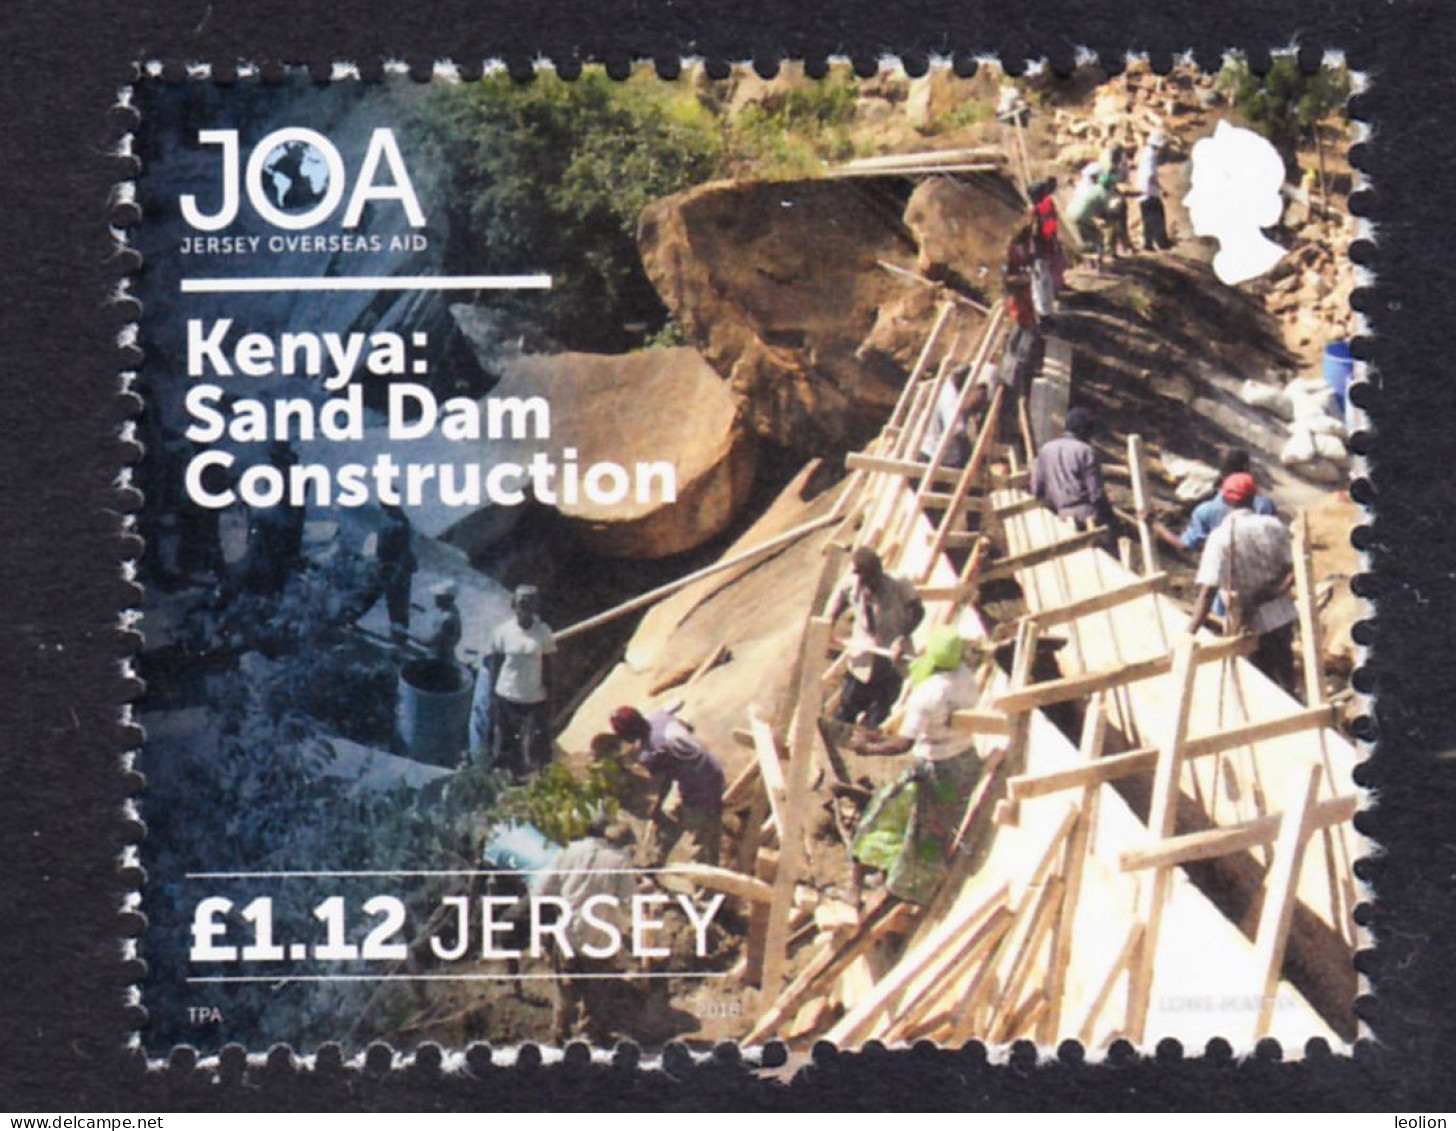 KENYA: Assistance To Sand Dam Construction On 2018 JERSEY Stamp - Kenya (1963-...)